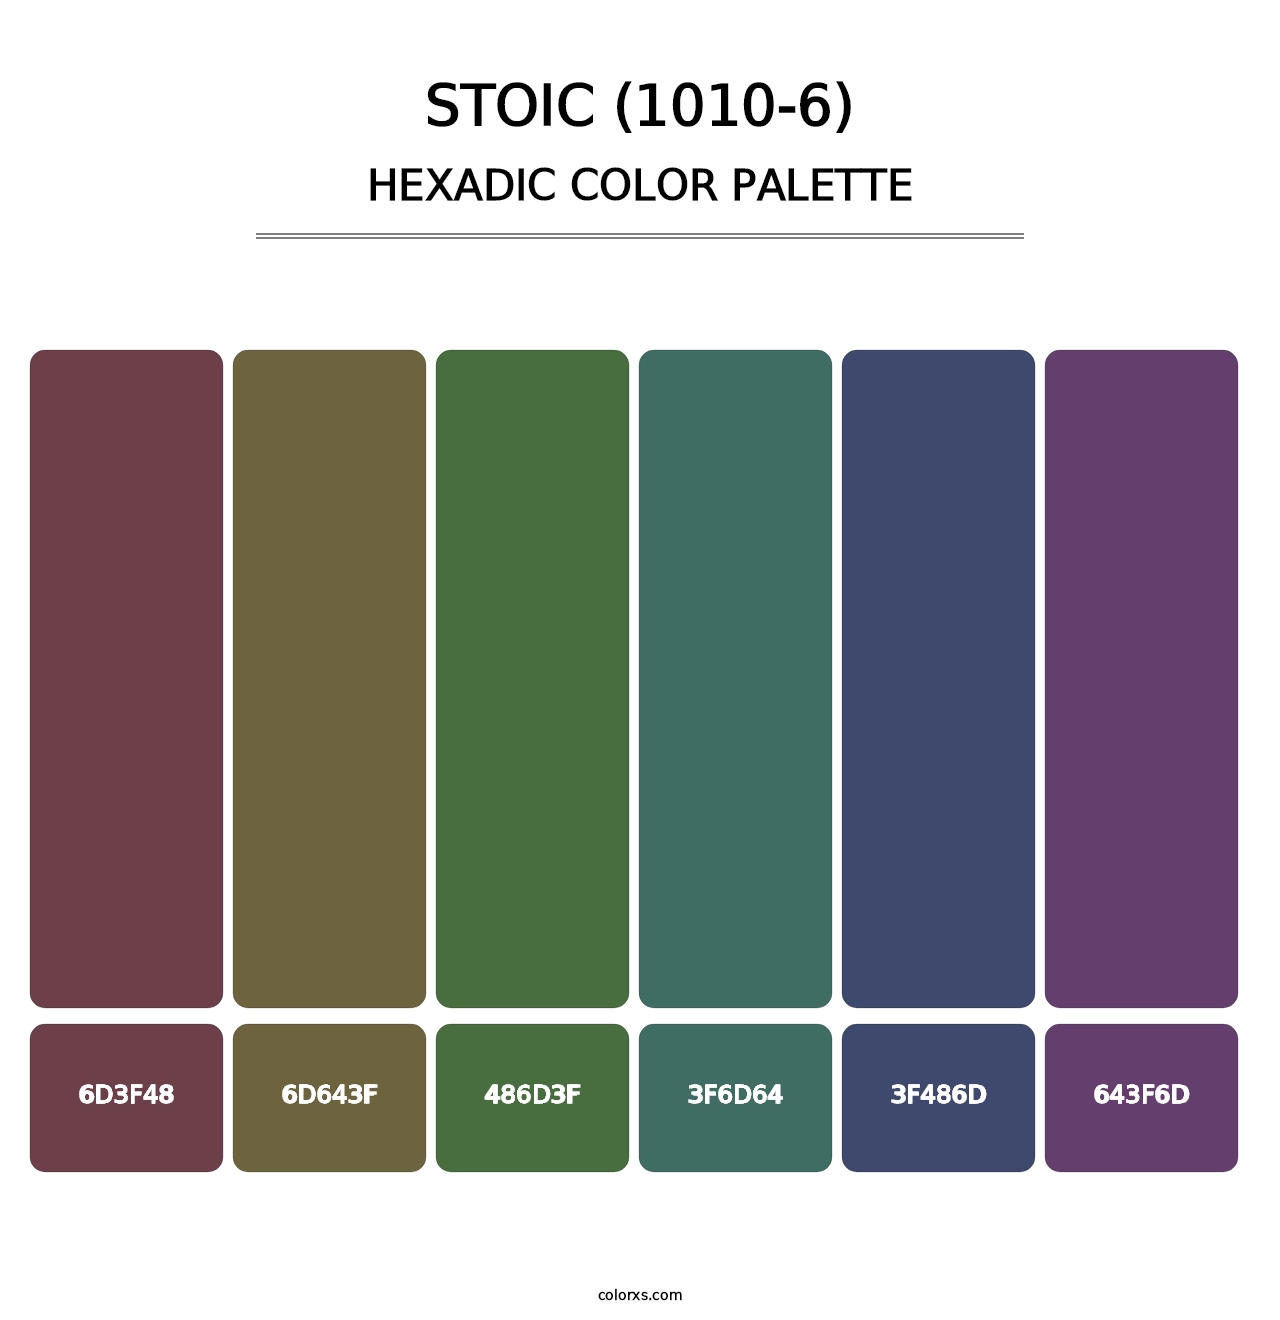 Stoic (1010-6) - Hexadic Color Palette